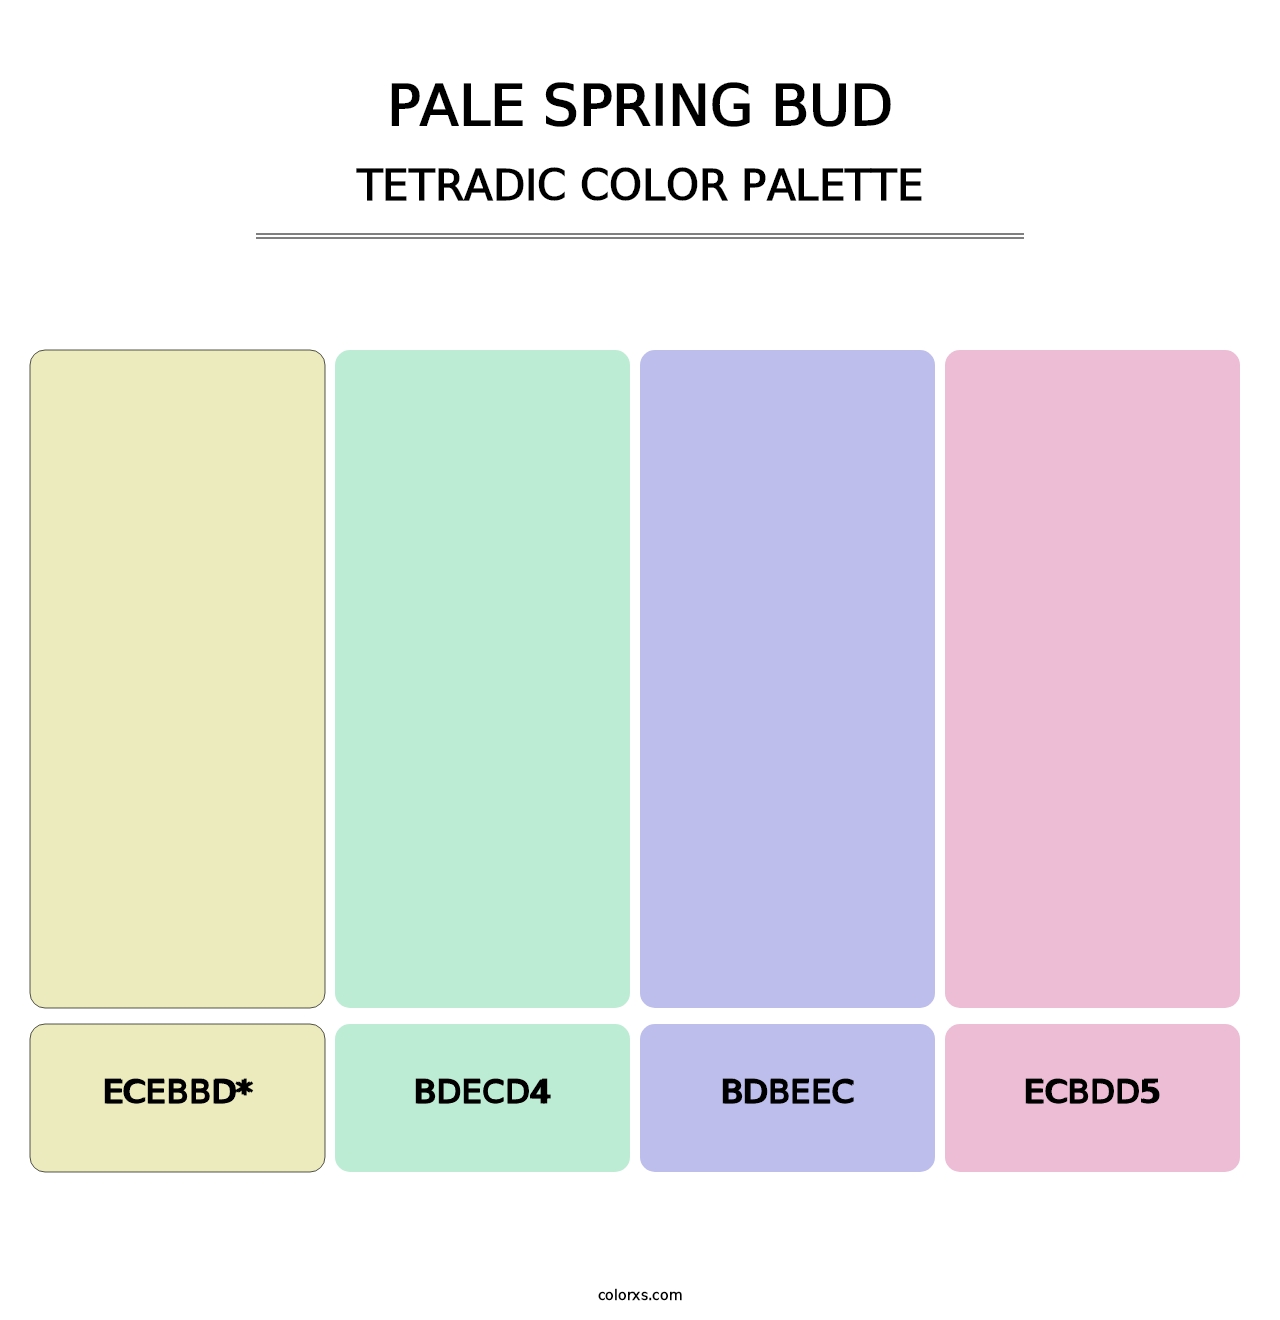 Pale Spring Bud - Tetradic Color Palette